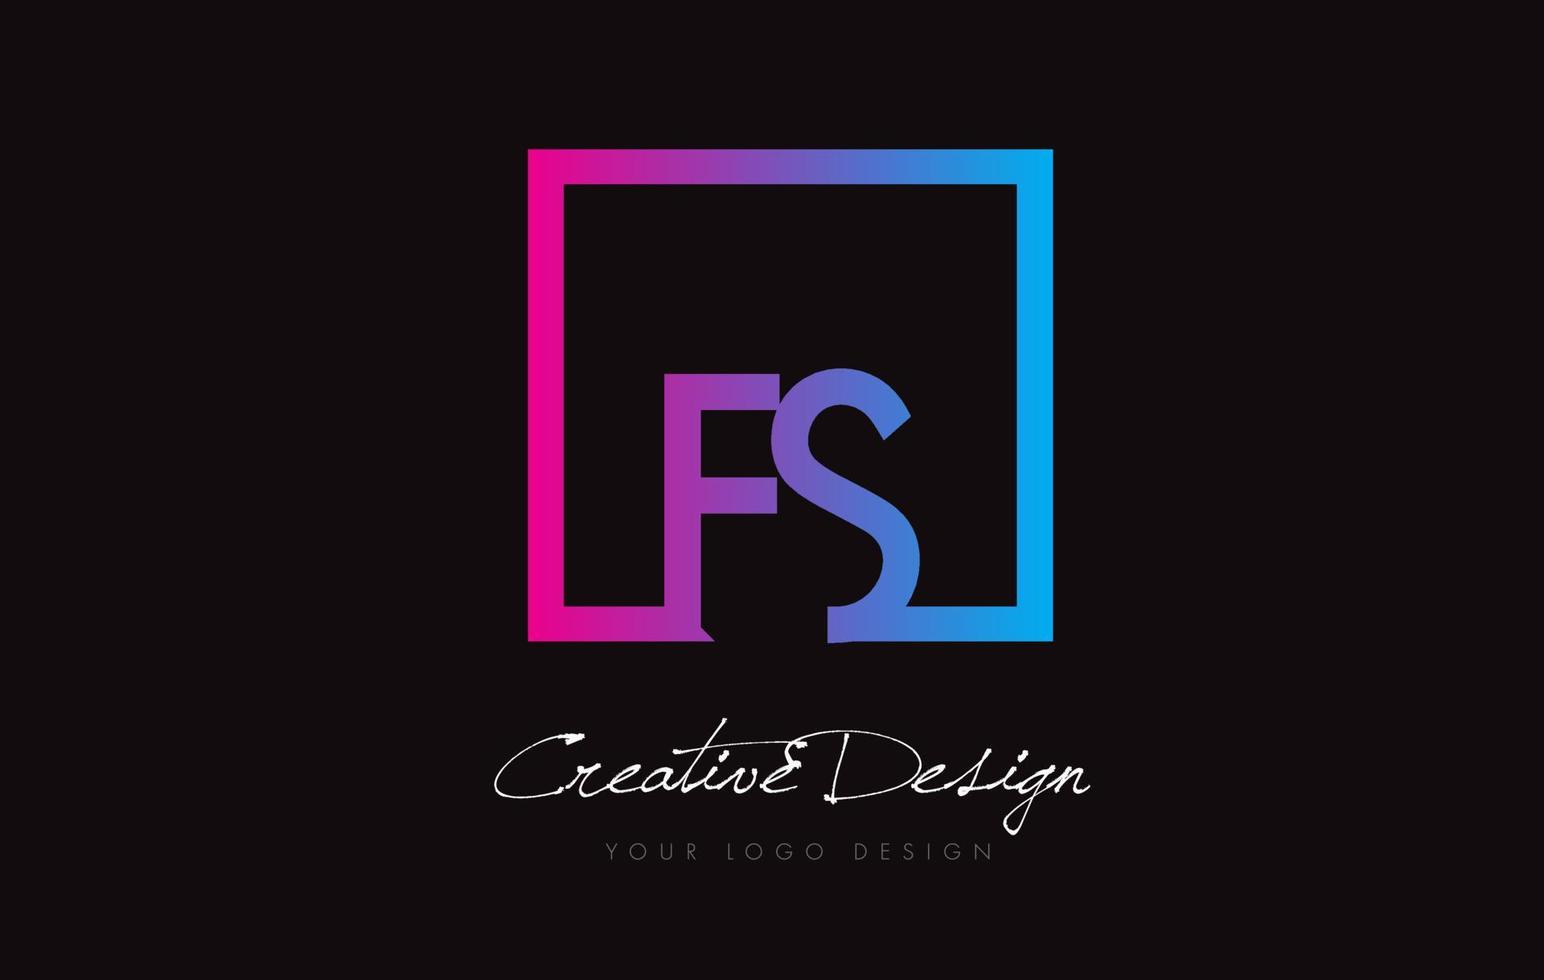 FS Square Frame Letter Logo Design with Purple Blue Colors. vector